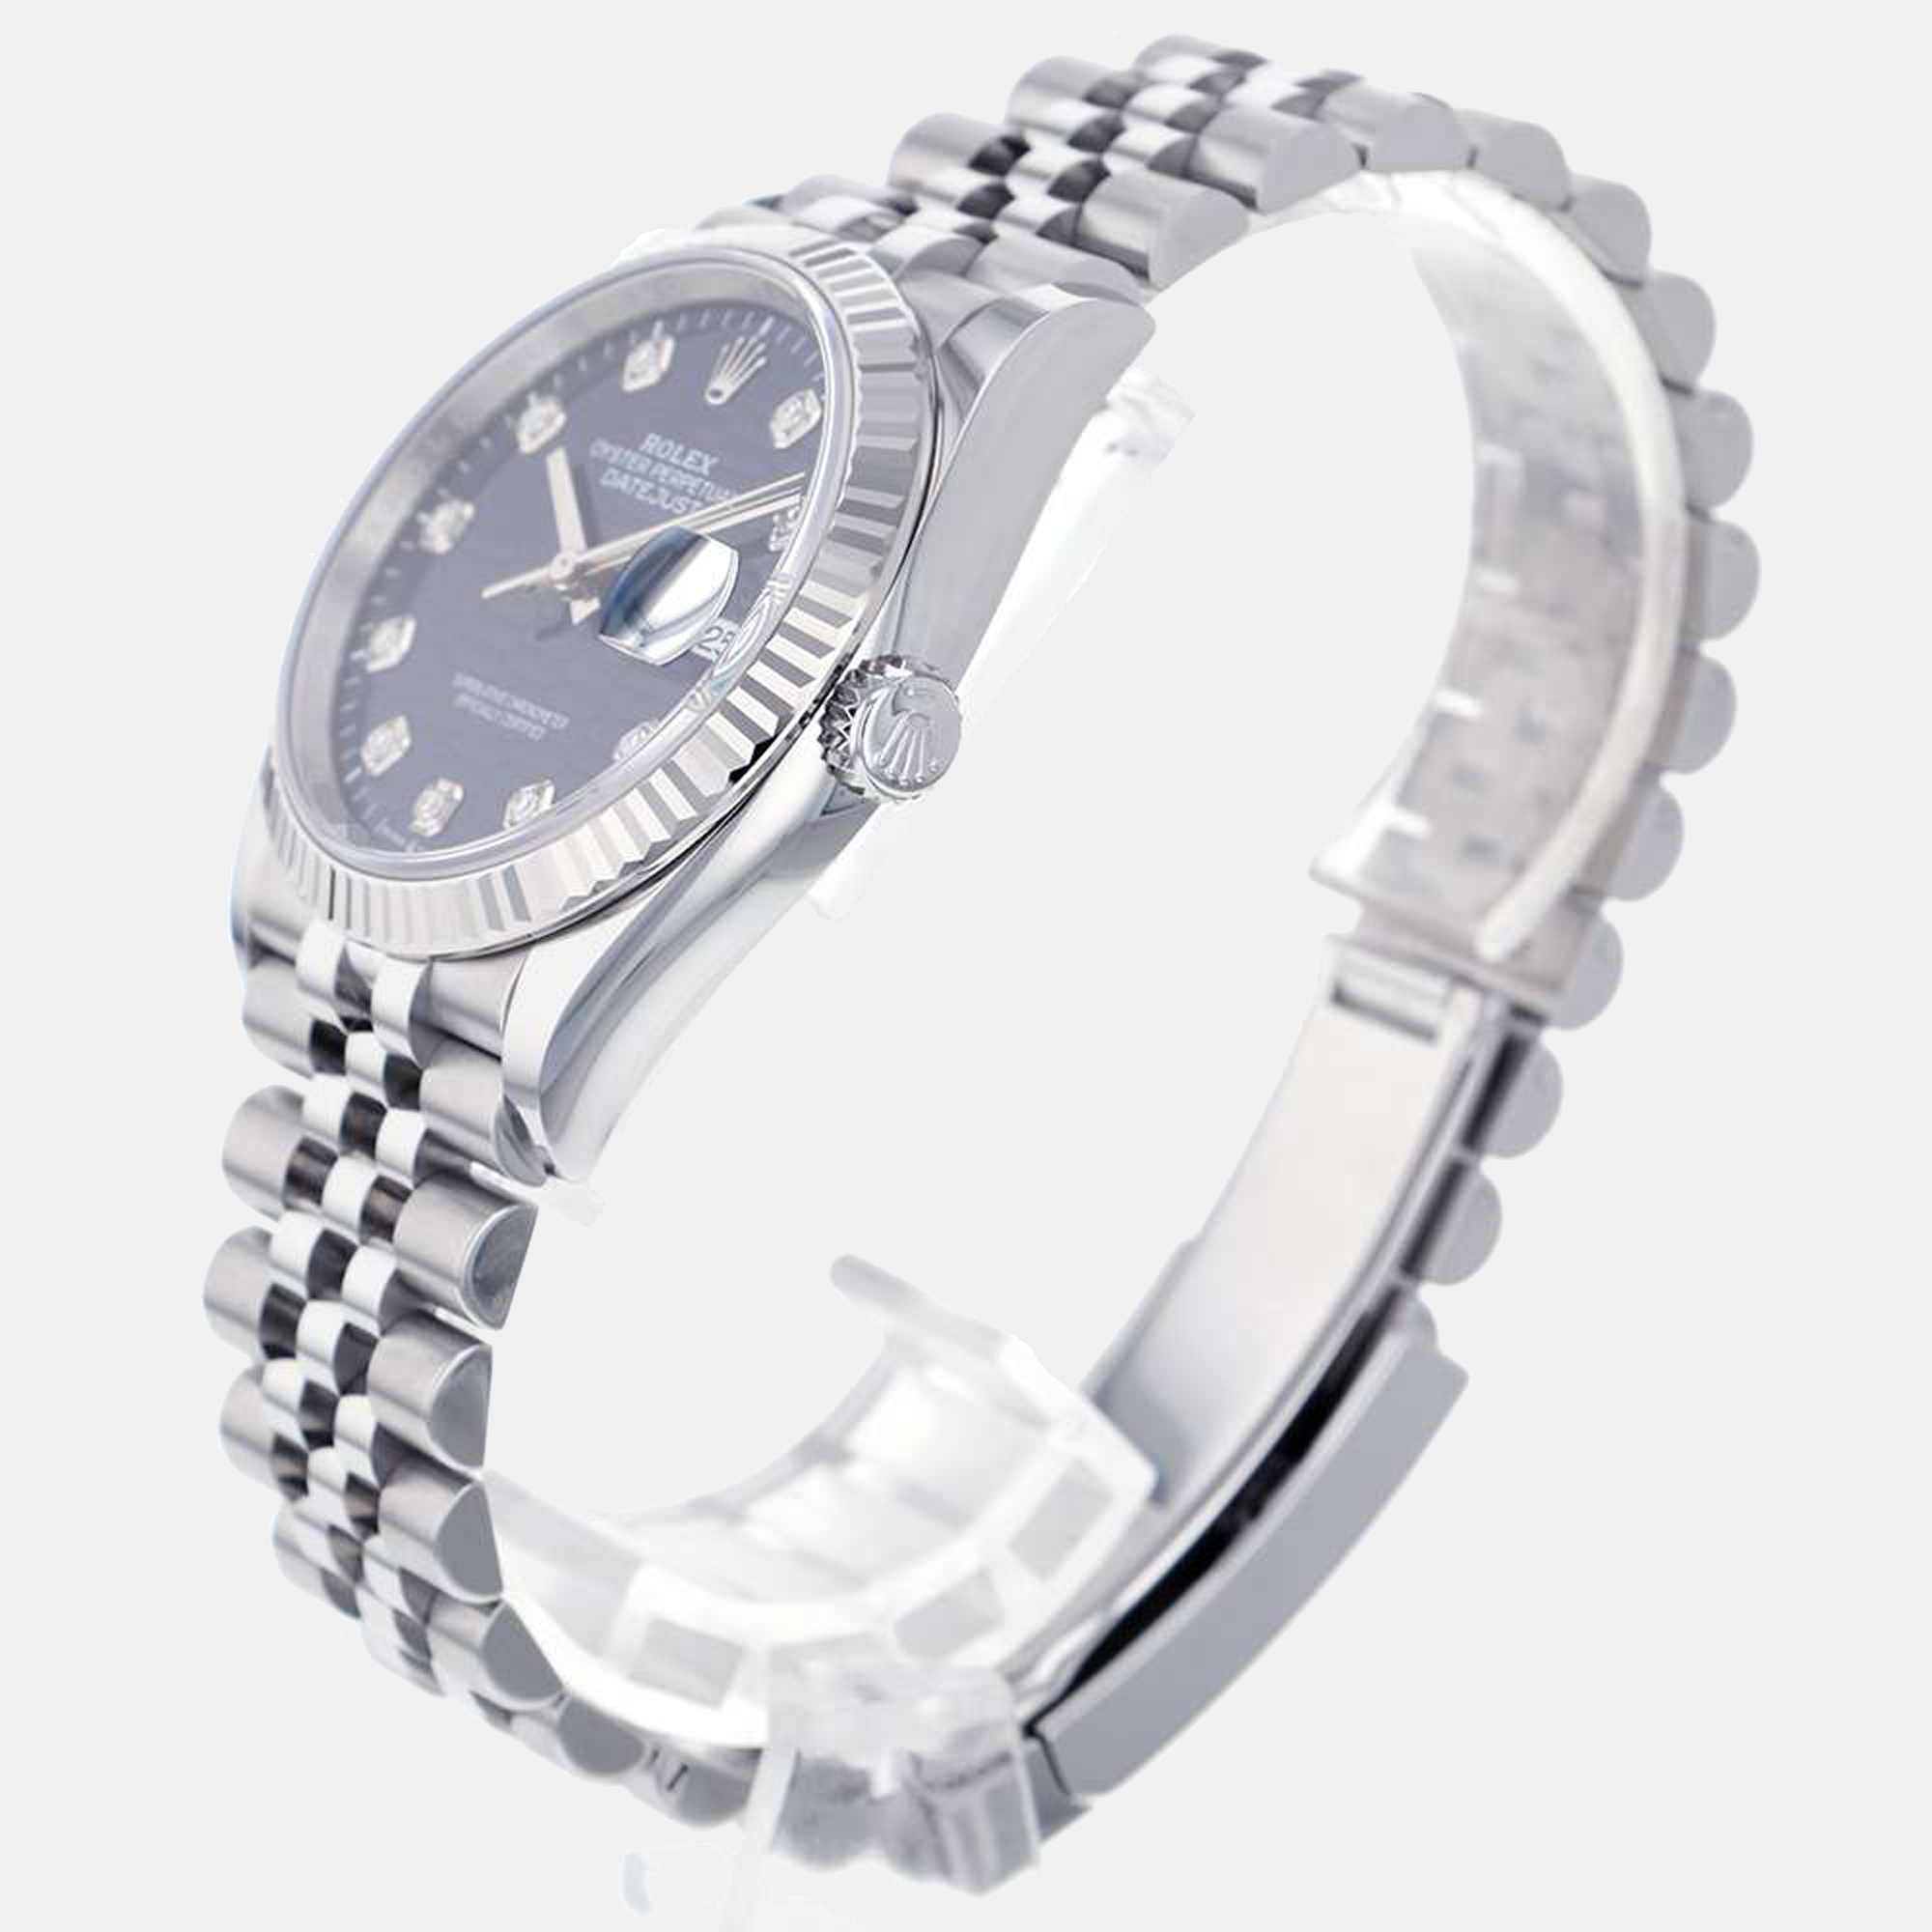 

Rolex Blue Diamonds 18K White Gold And Stainless Steel Datejust 126234G Men's Wristwatch 36 mm